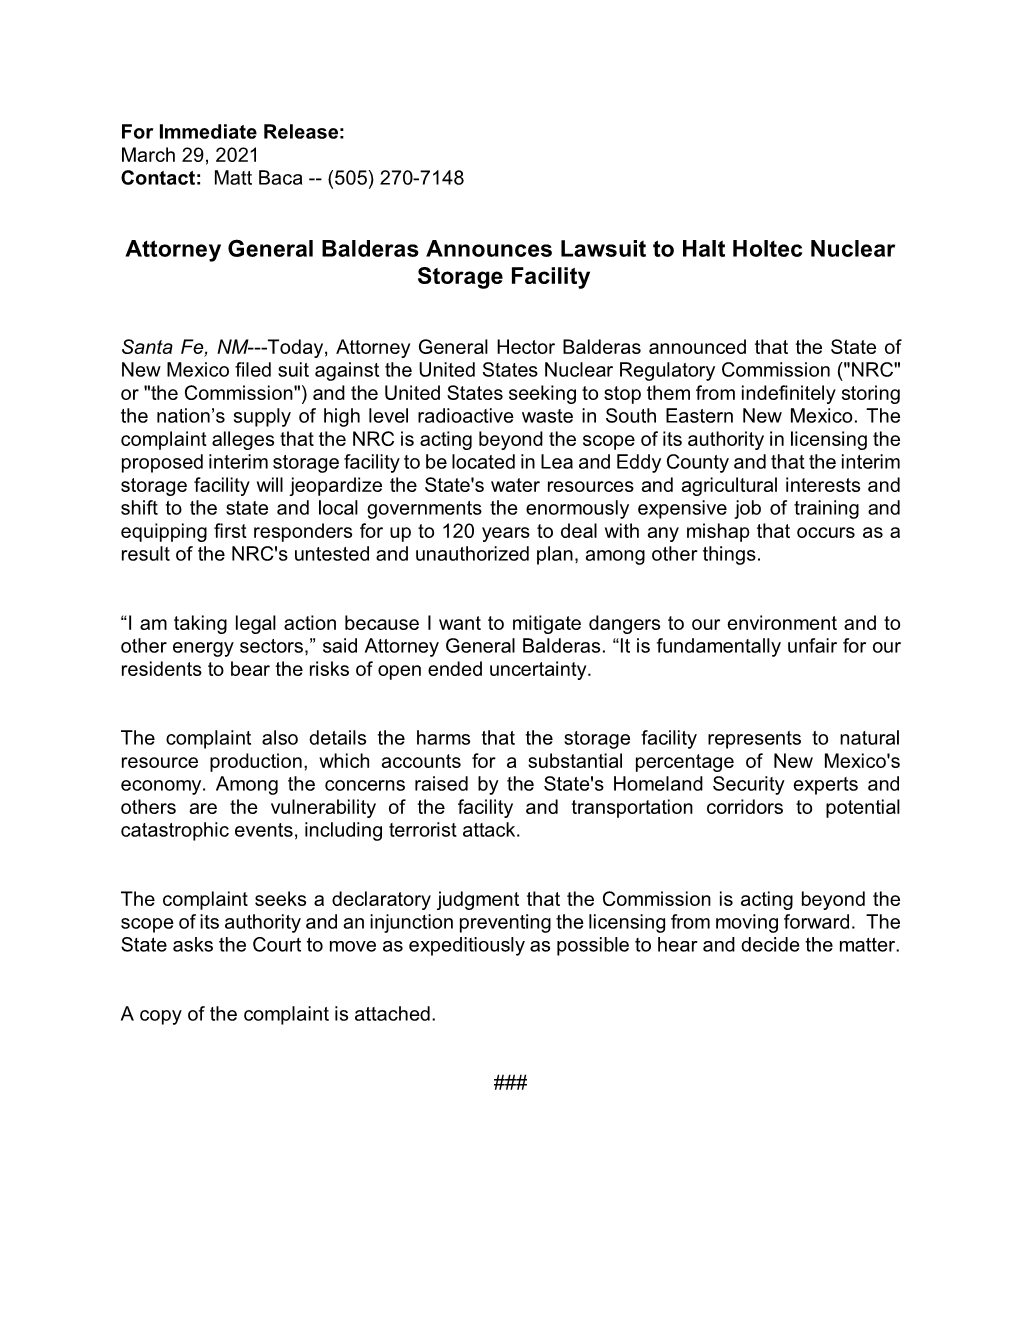 Attorney General Balderas Announces Lawsuit to Halt Holtec Nuclear Storage Facility